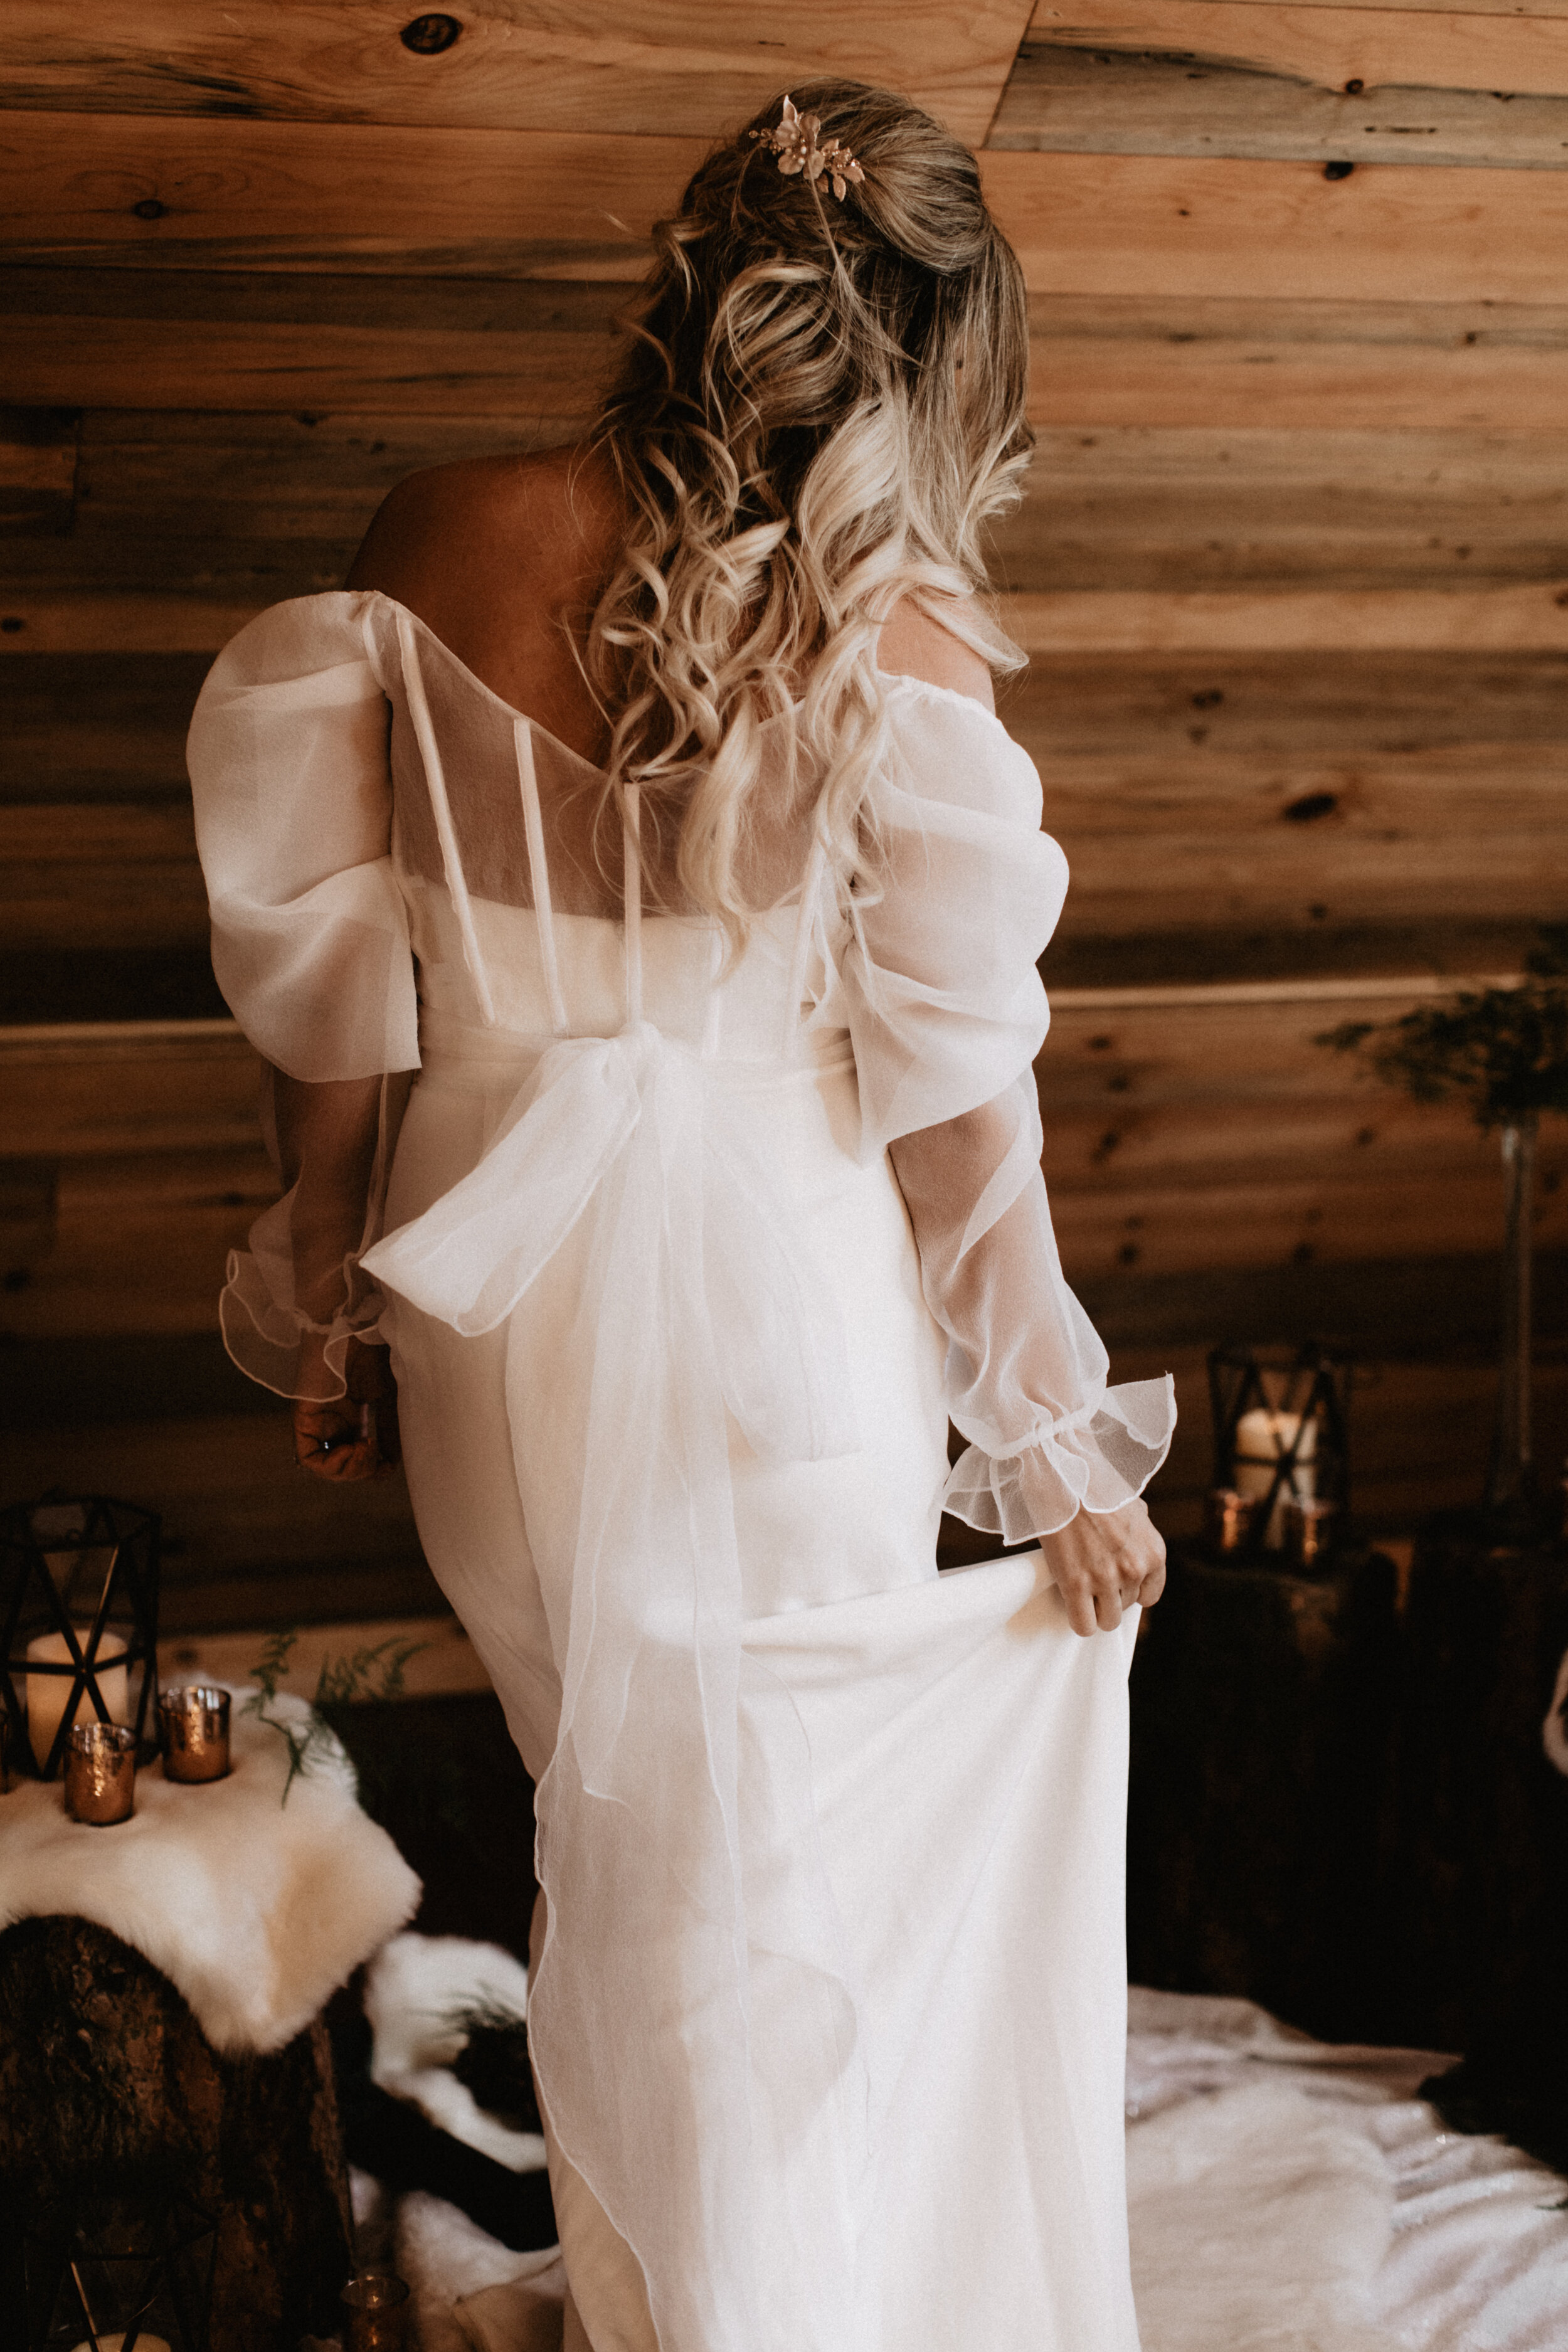  ROSE wedding dress by The Label at Deer Creek Valley Ranch in Denver, Colorado  